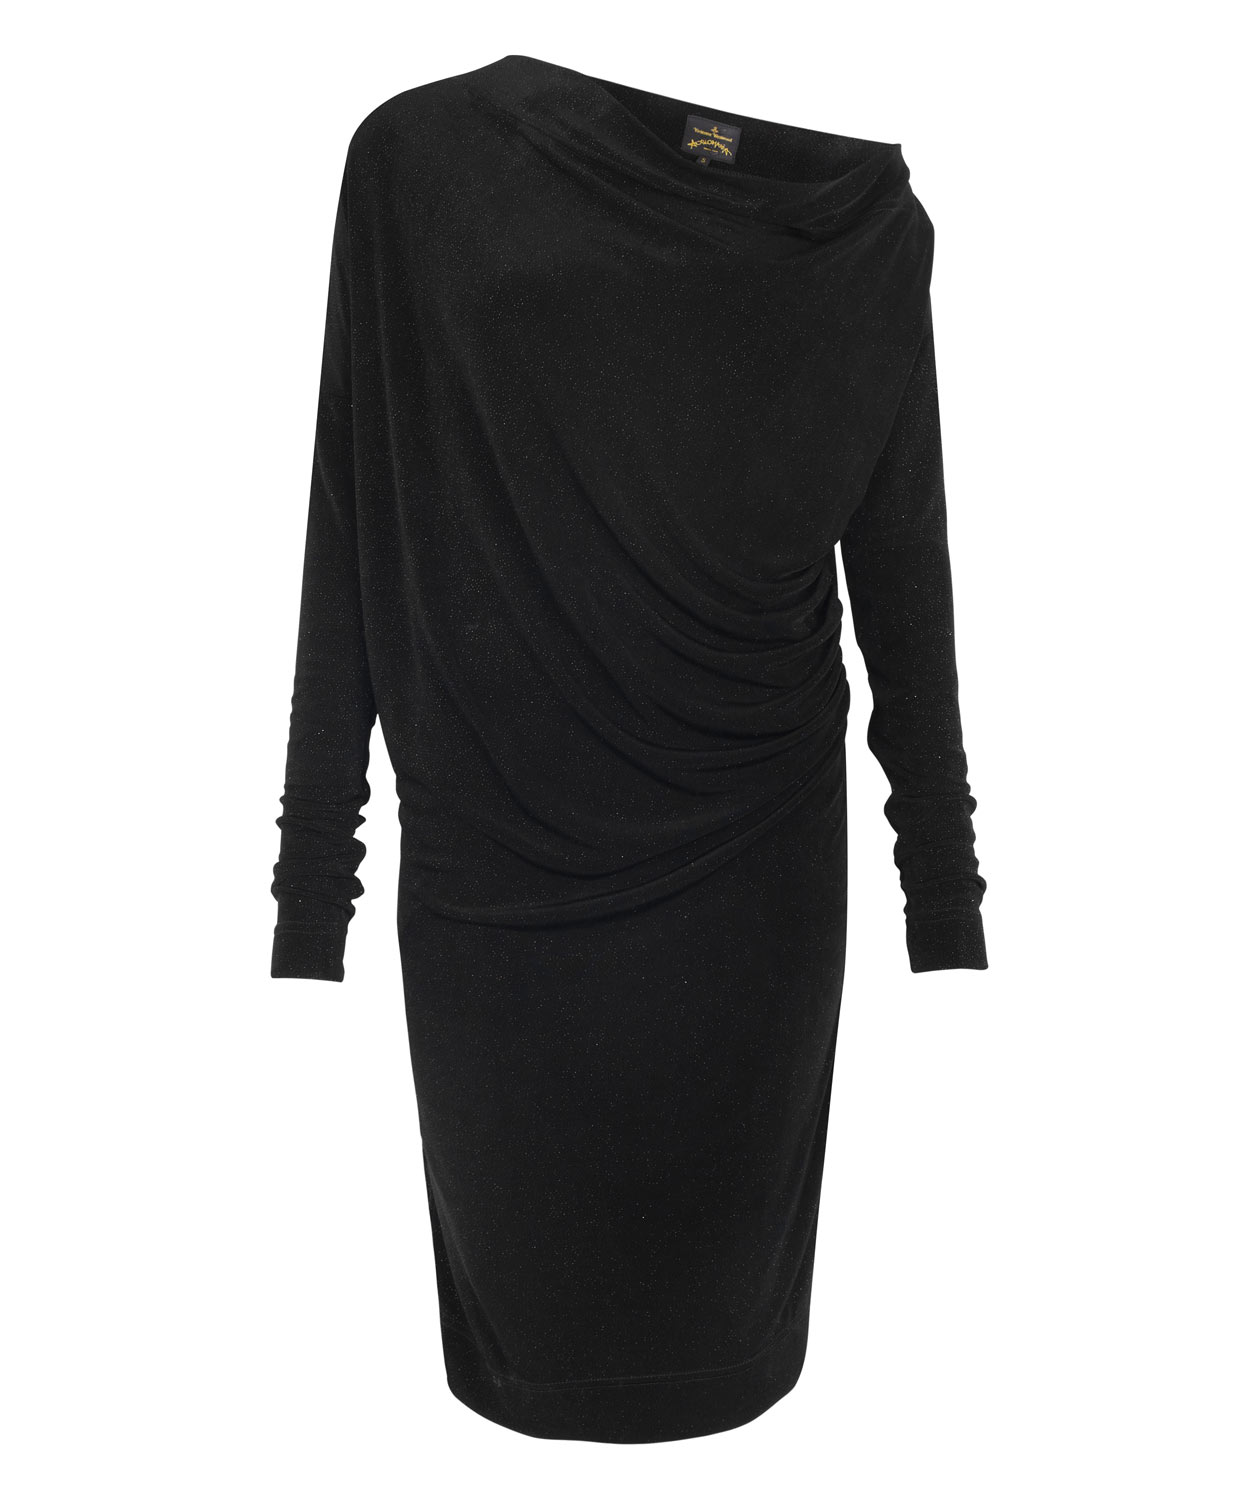 Lyst - Vivienne Westwood Anglomania Black Glitter Drape Dress in Black